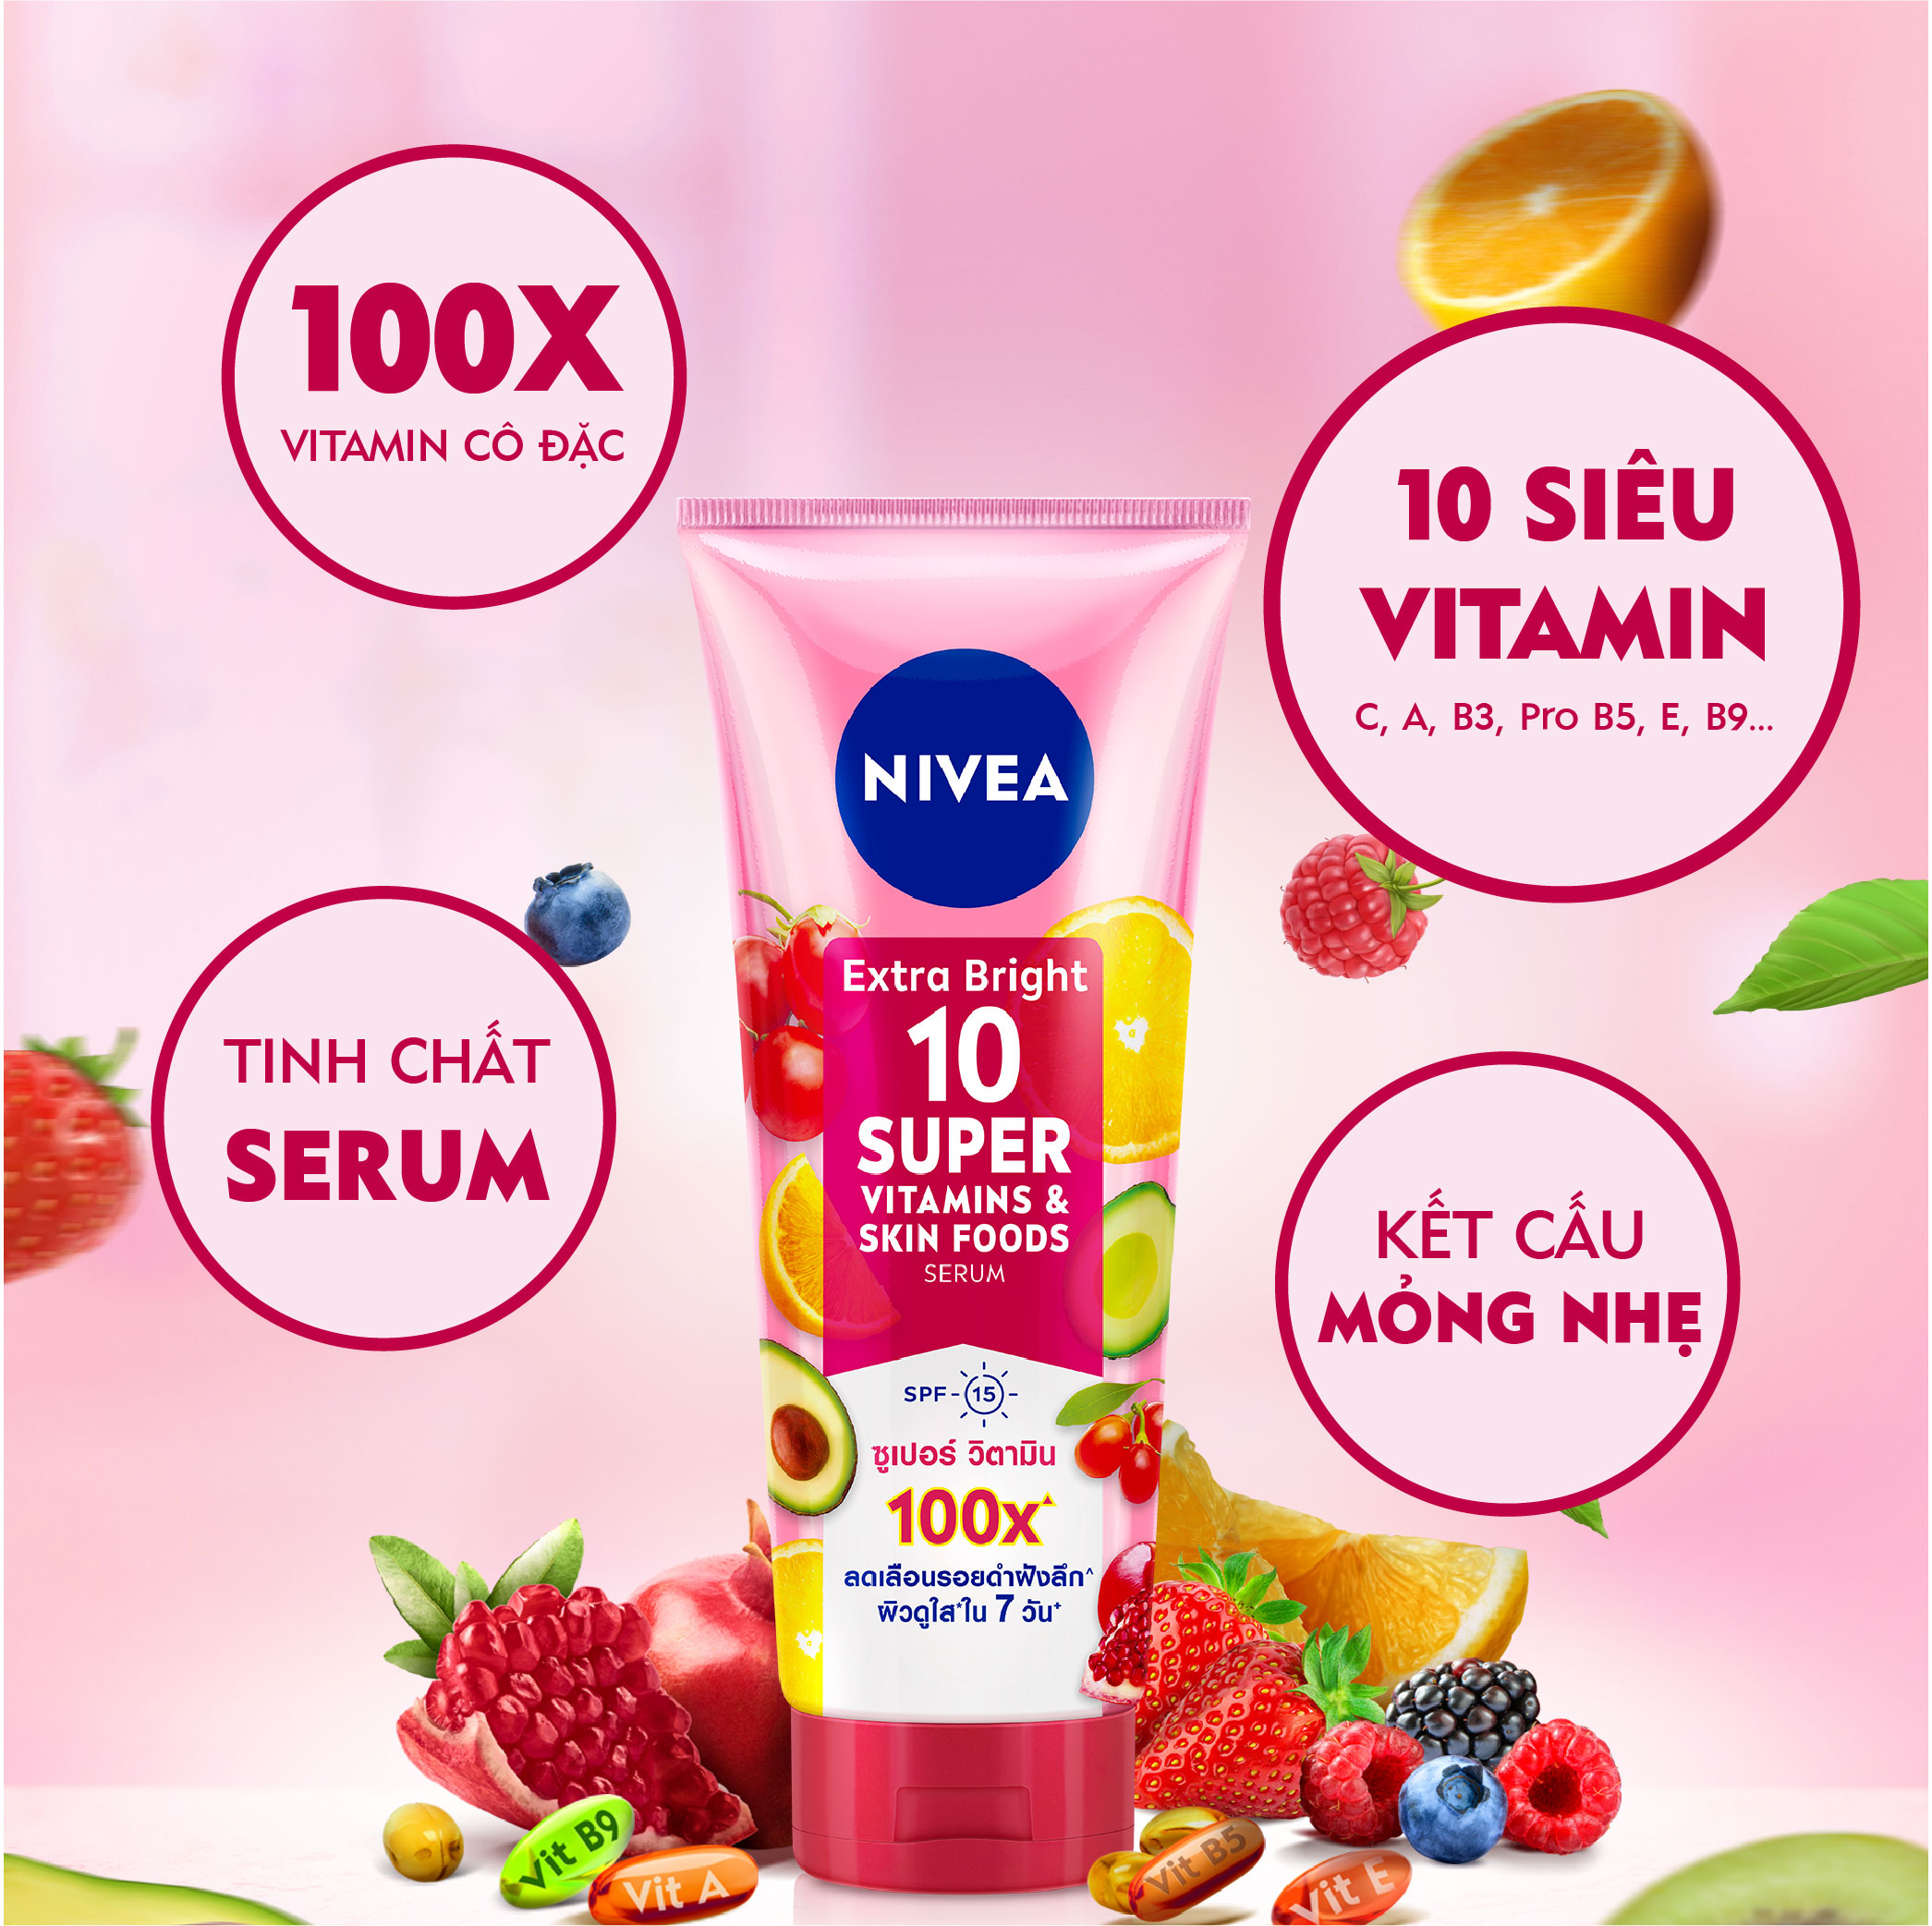 Nivea Extra Bright 10 Super Vitamins Skin Foods Serum SPF15